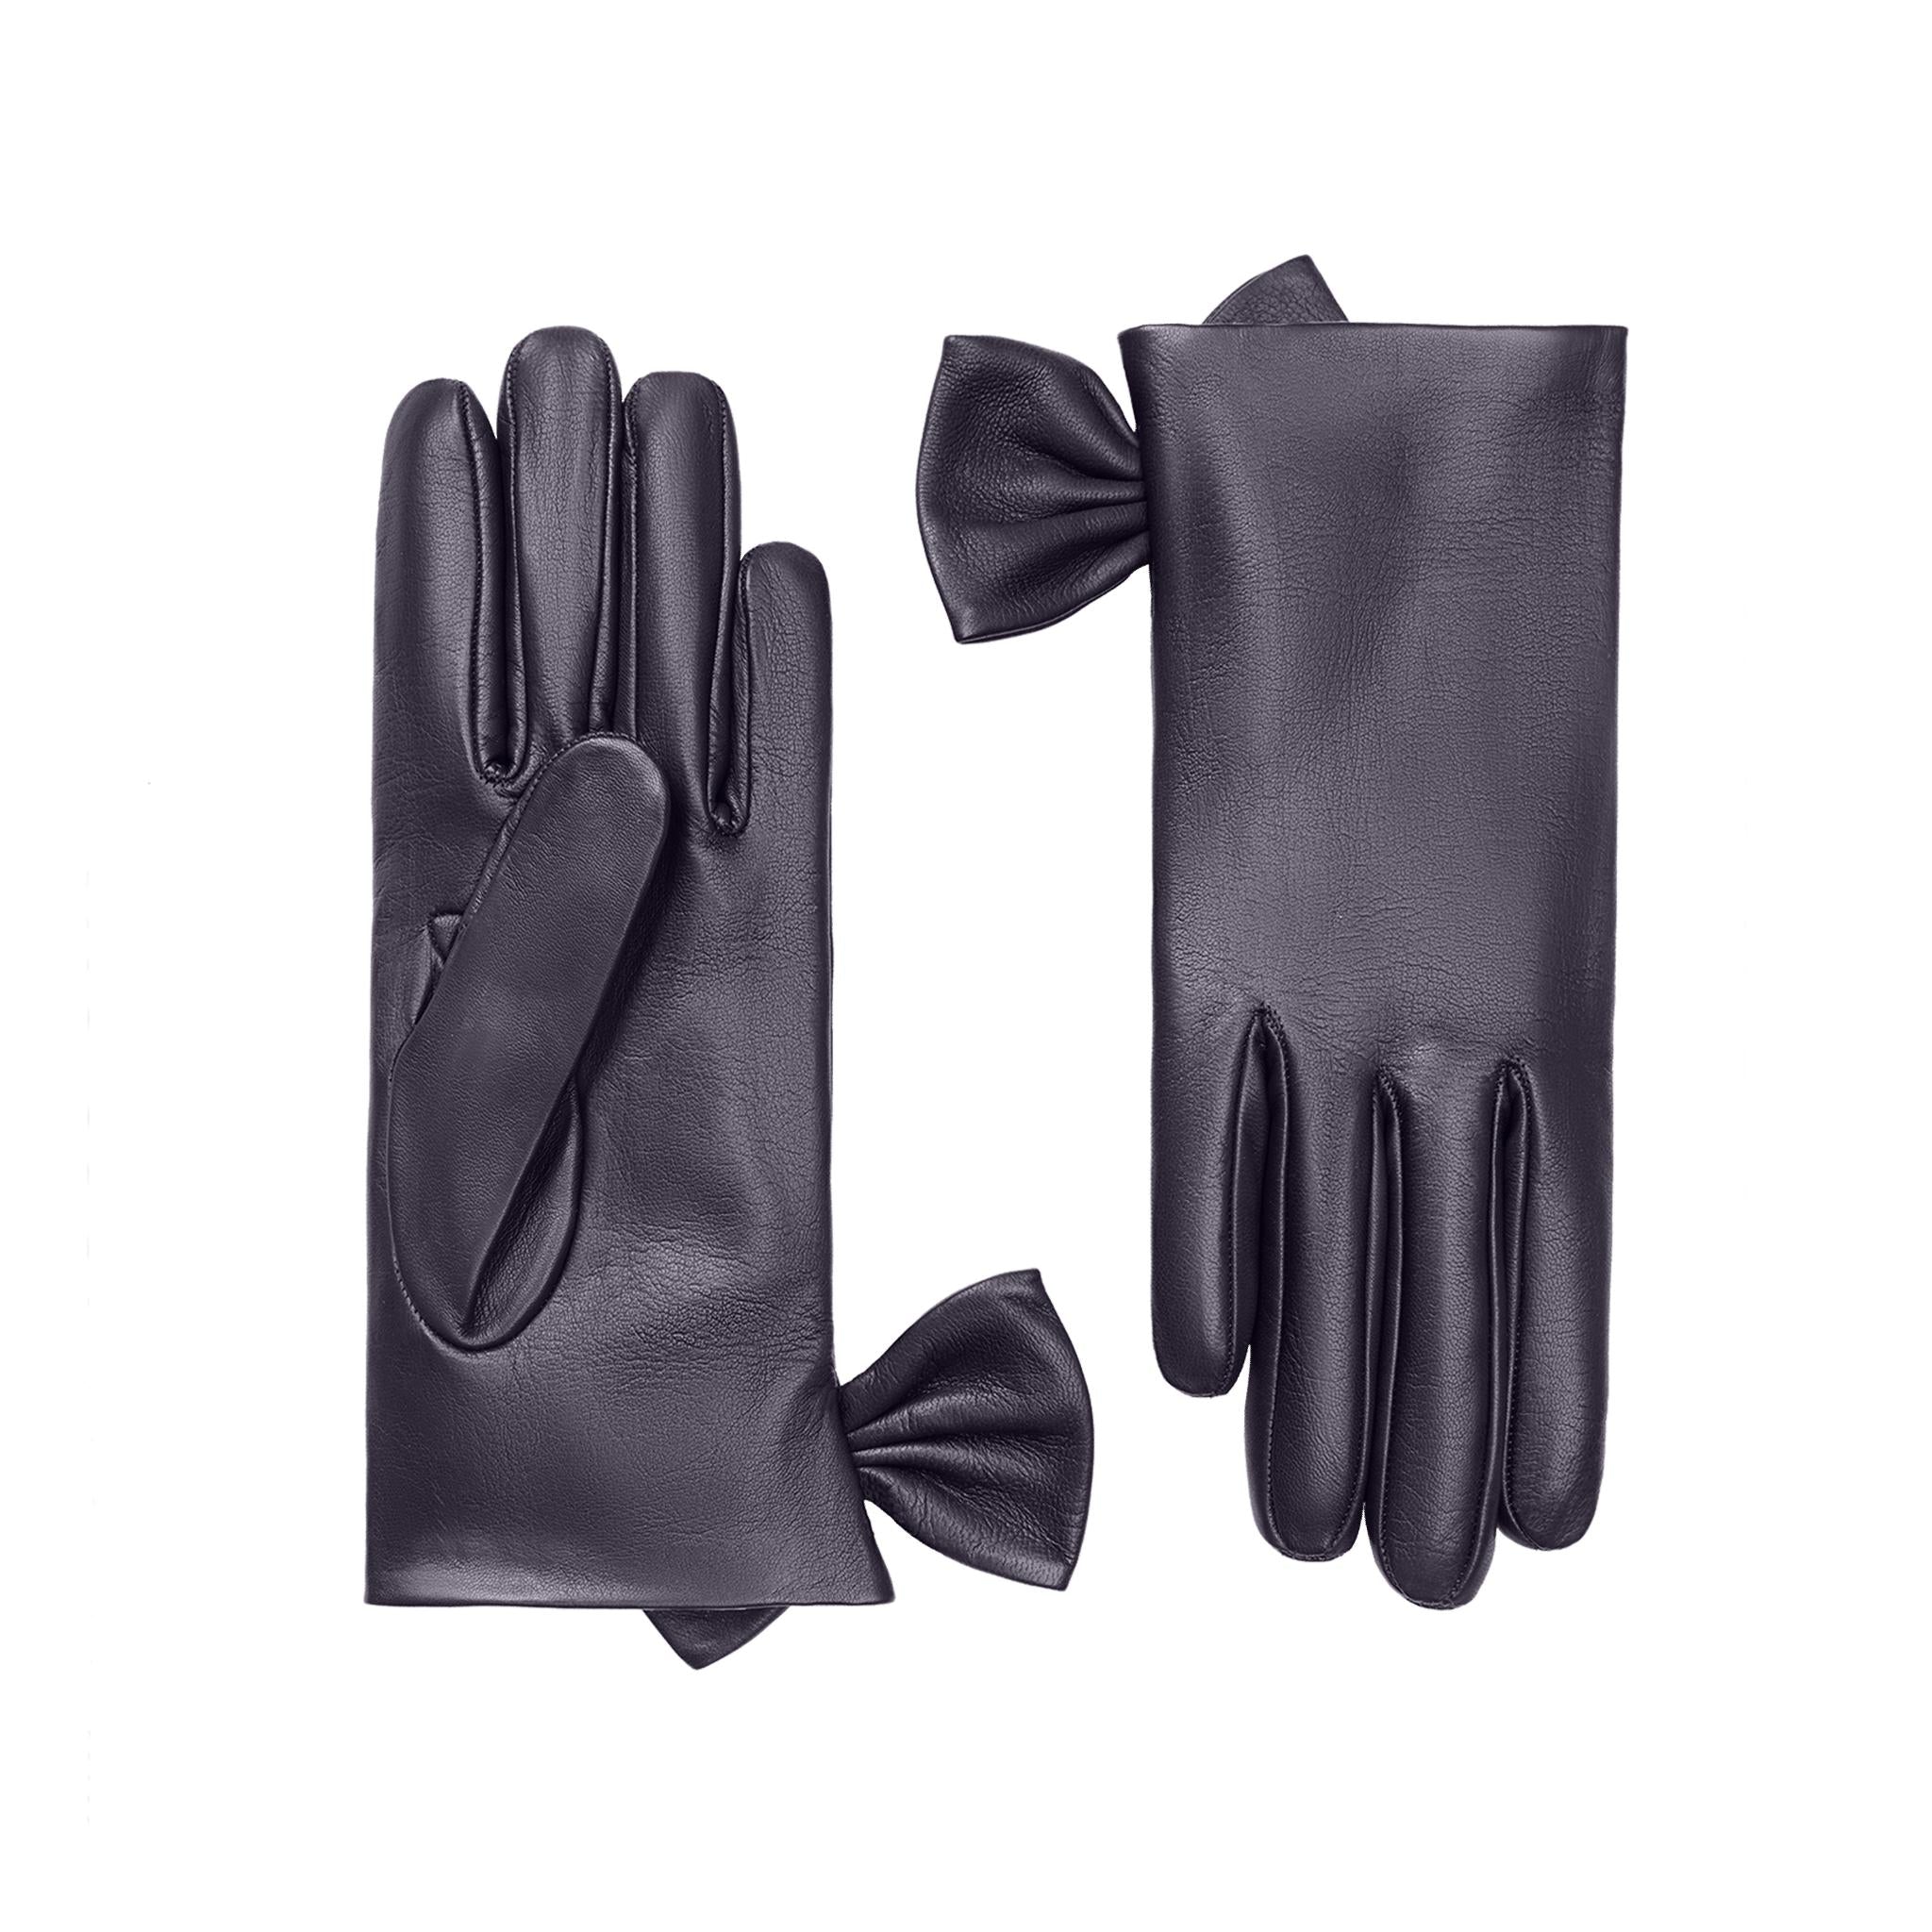 Cornelia James - Navy Blue Leather Gloves with Silk Lining - Fleur - Size Medium (7) - Handmade Leather Gloves by Cornelia James product